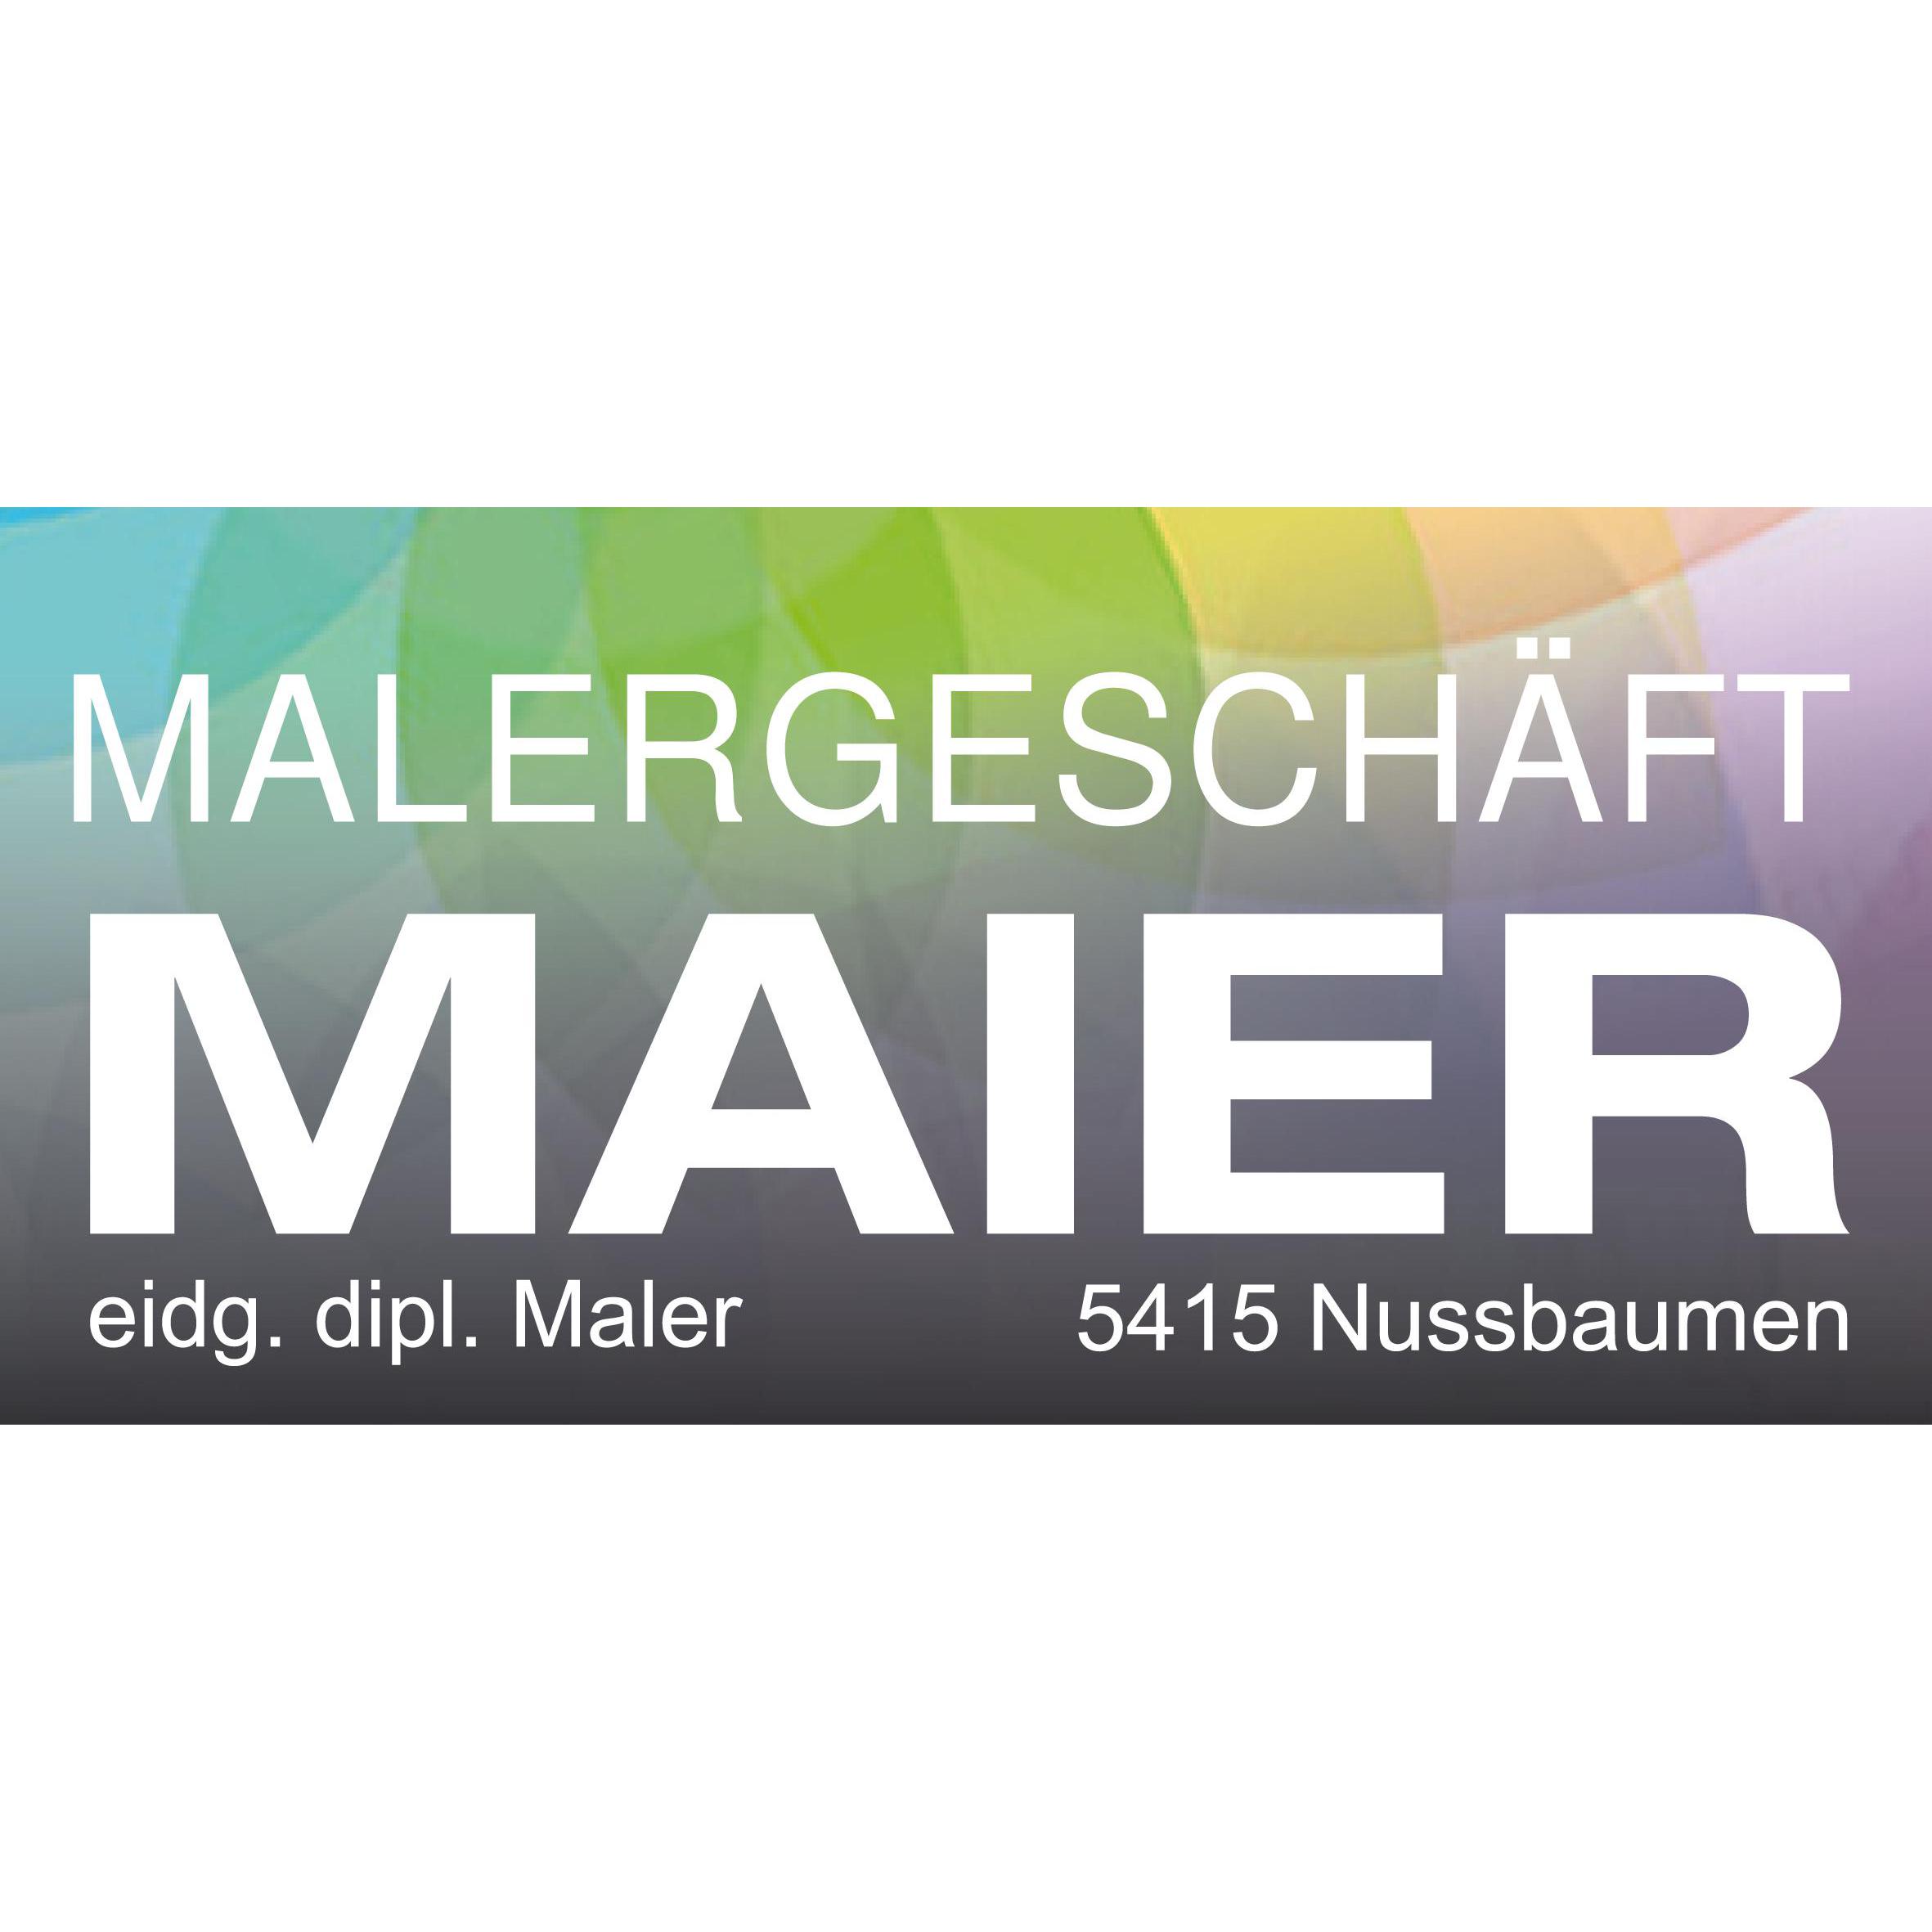 Malergeschäft Maier Logo